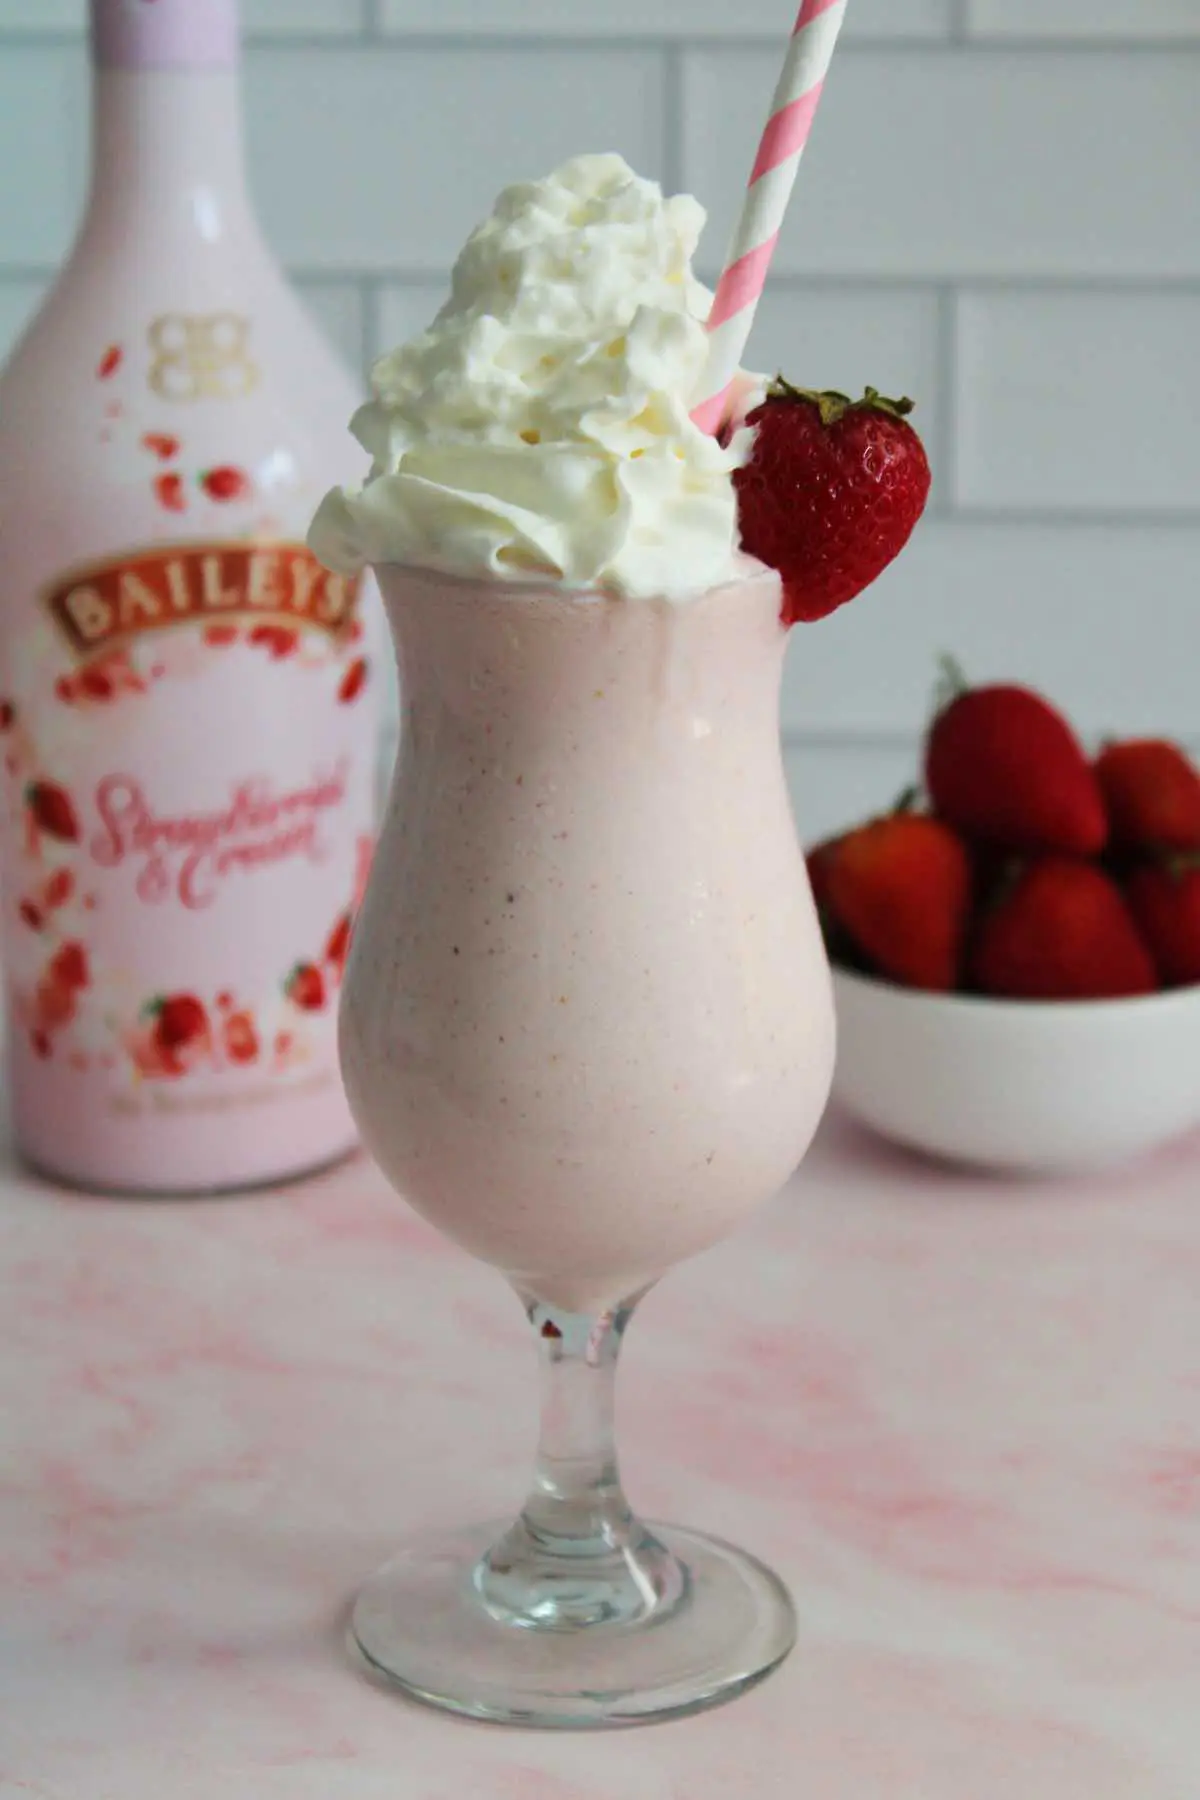 Bailey's strawberry milkshake